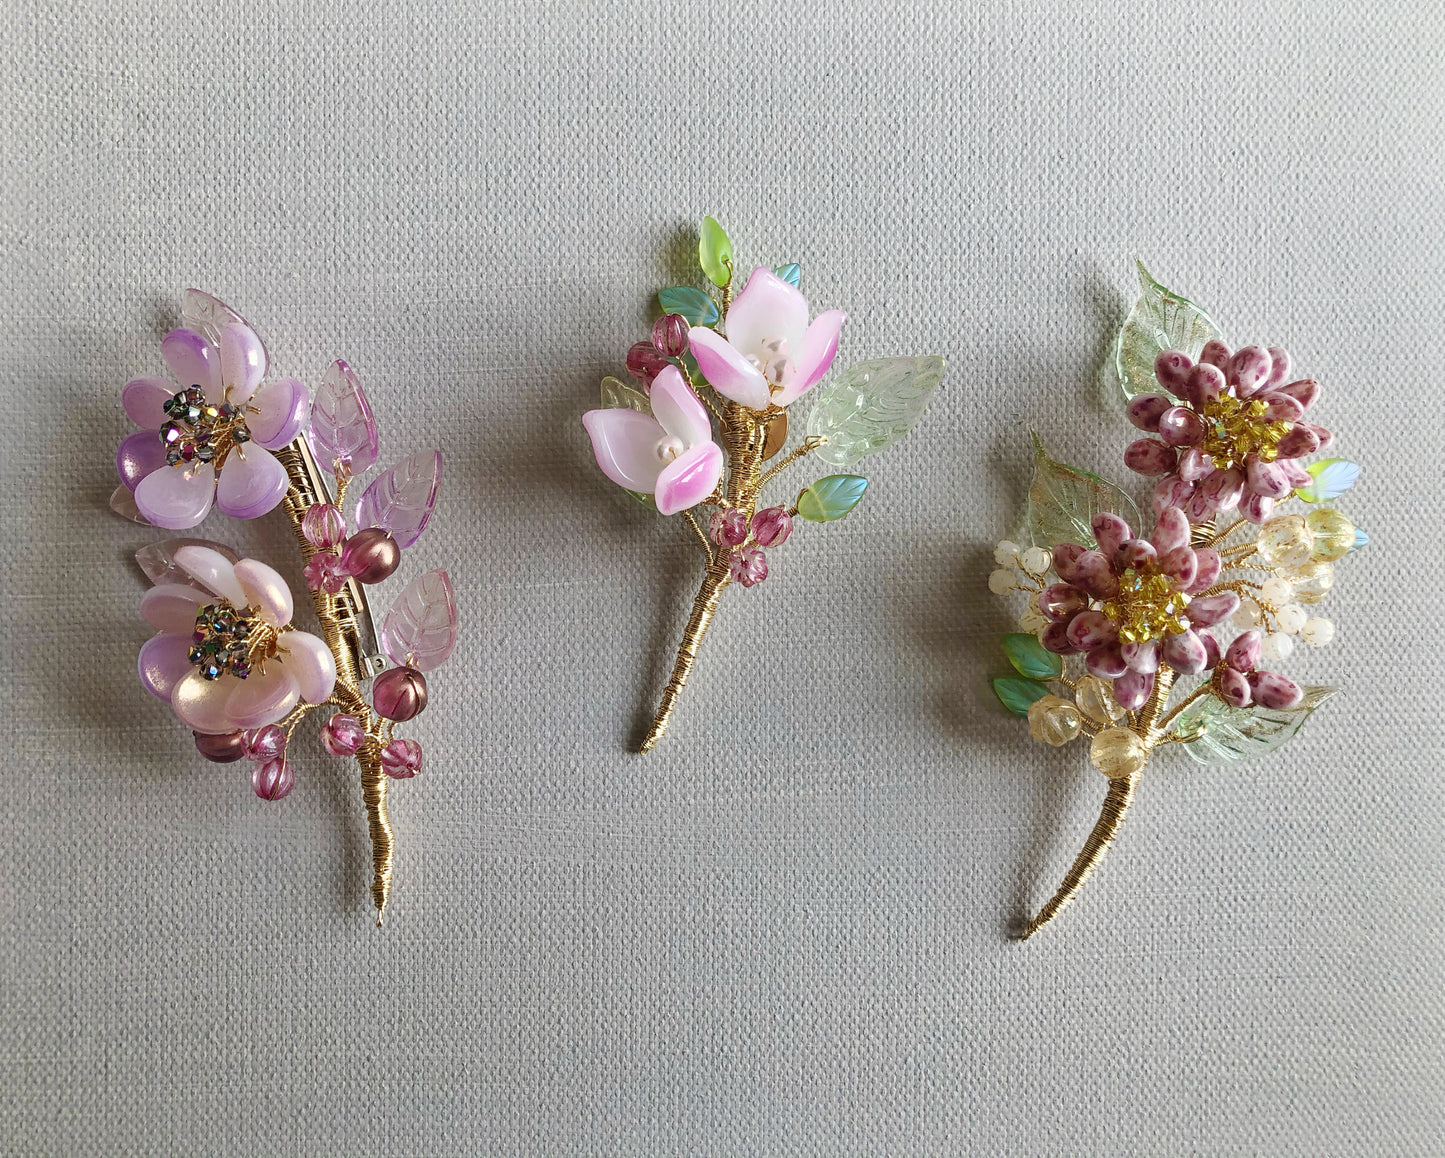 《January Palette II》Sugar plum floral bouquet brooch